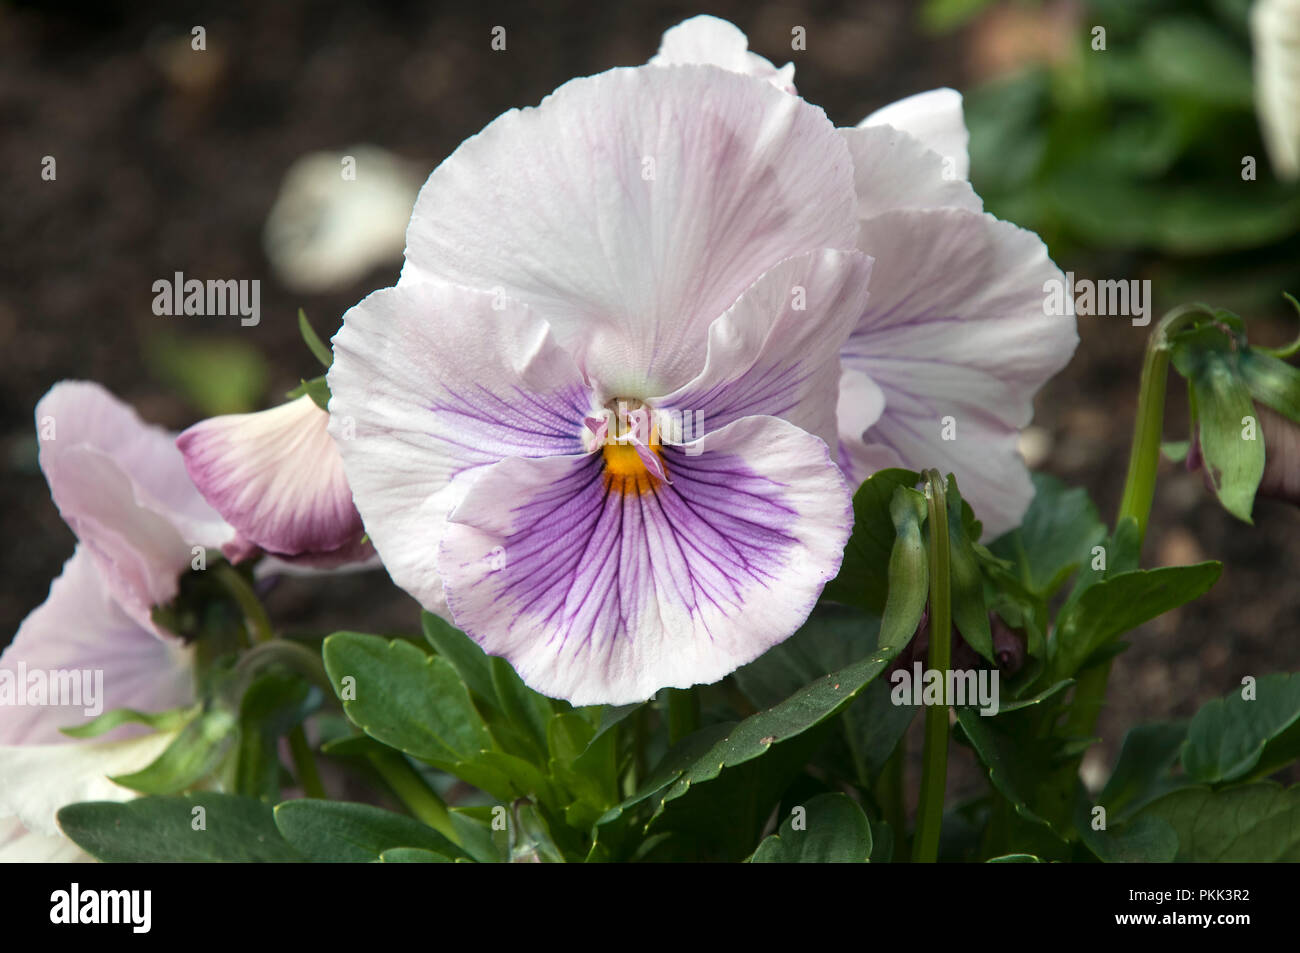 Sydney Australia, flower of a pale pink/mauve pansy plant Stock Photo